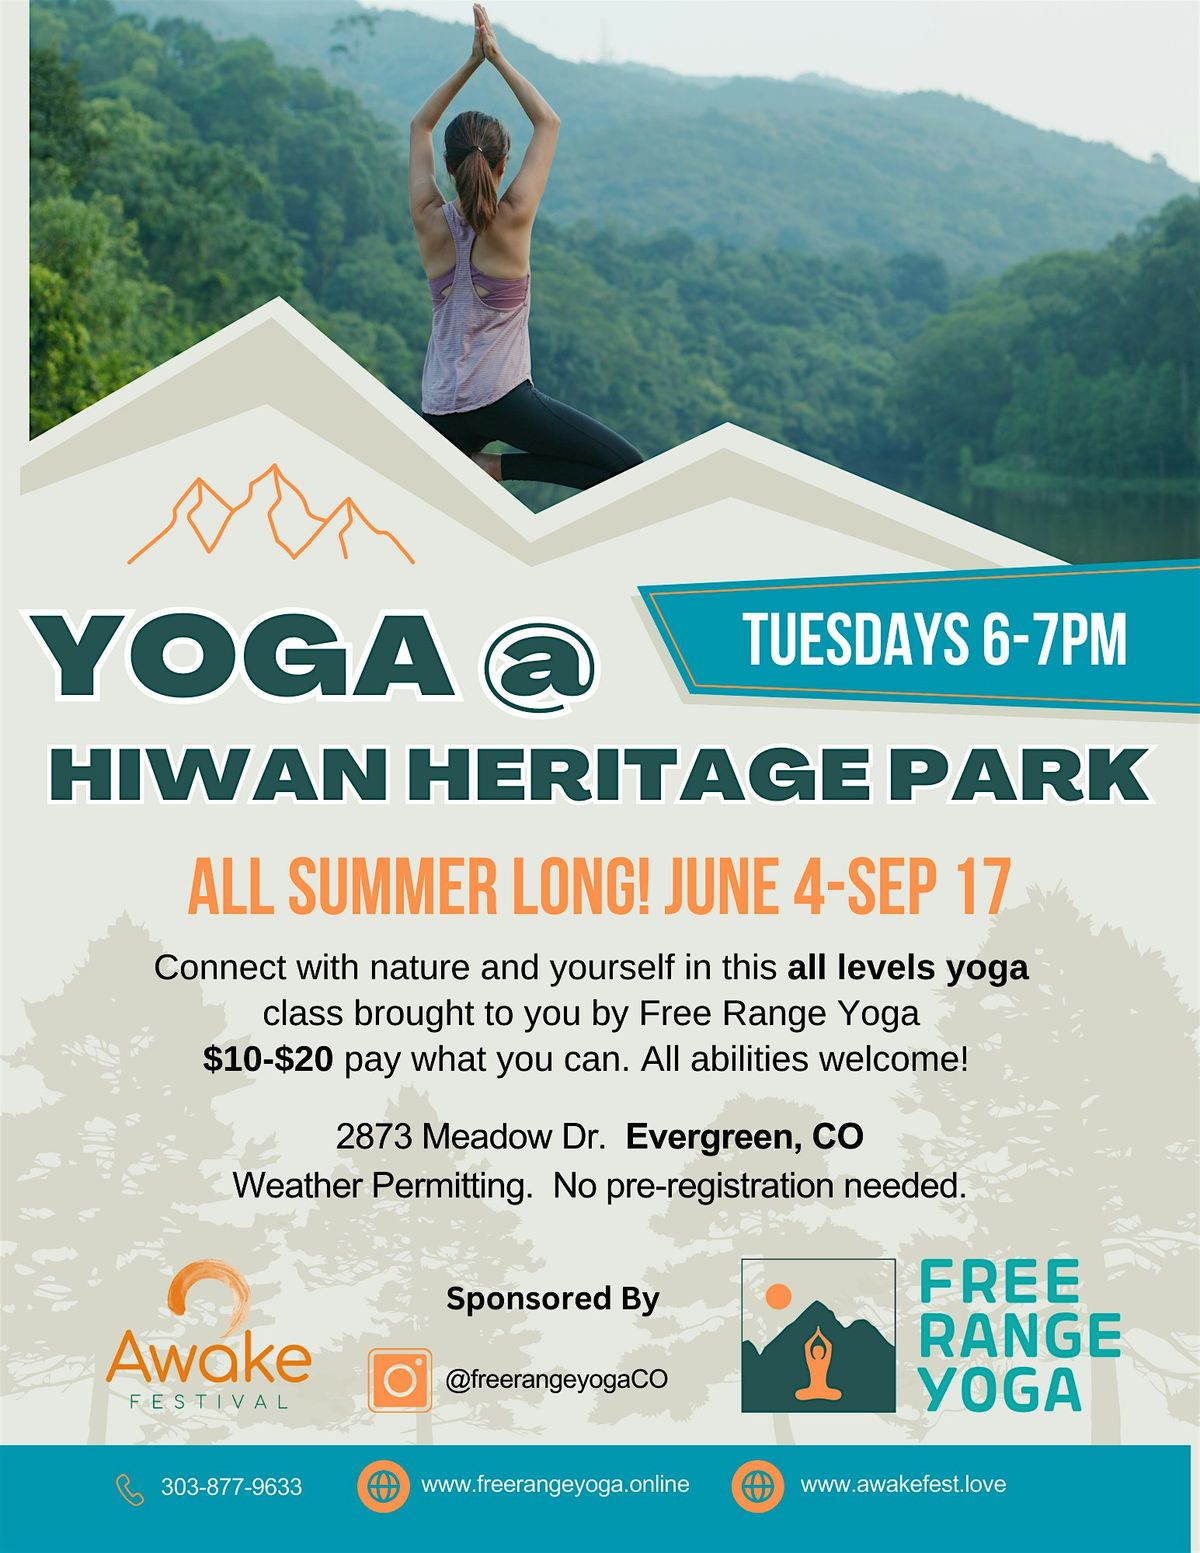 Yoga @ Hiwan Heritage Park